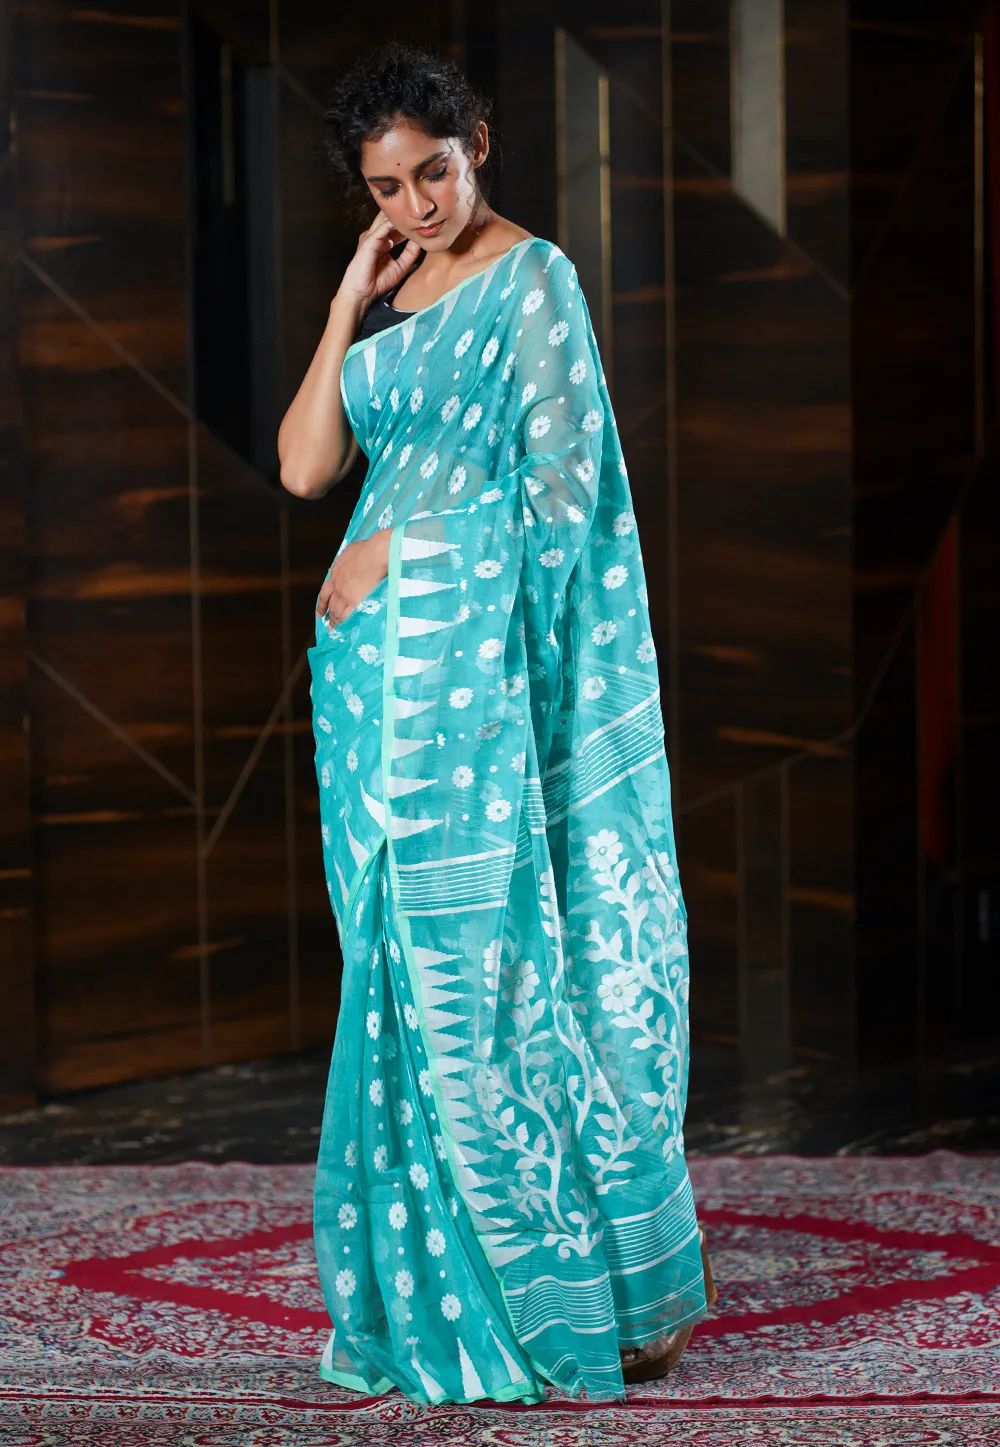 capri blue jamdani saree with white and gold floral woven motifs 5f48983675031 1598593078